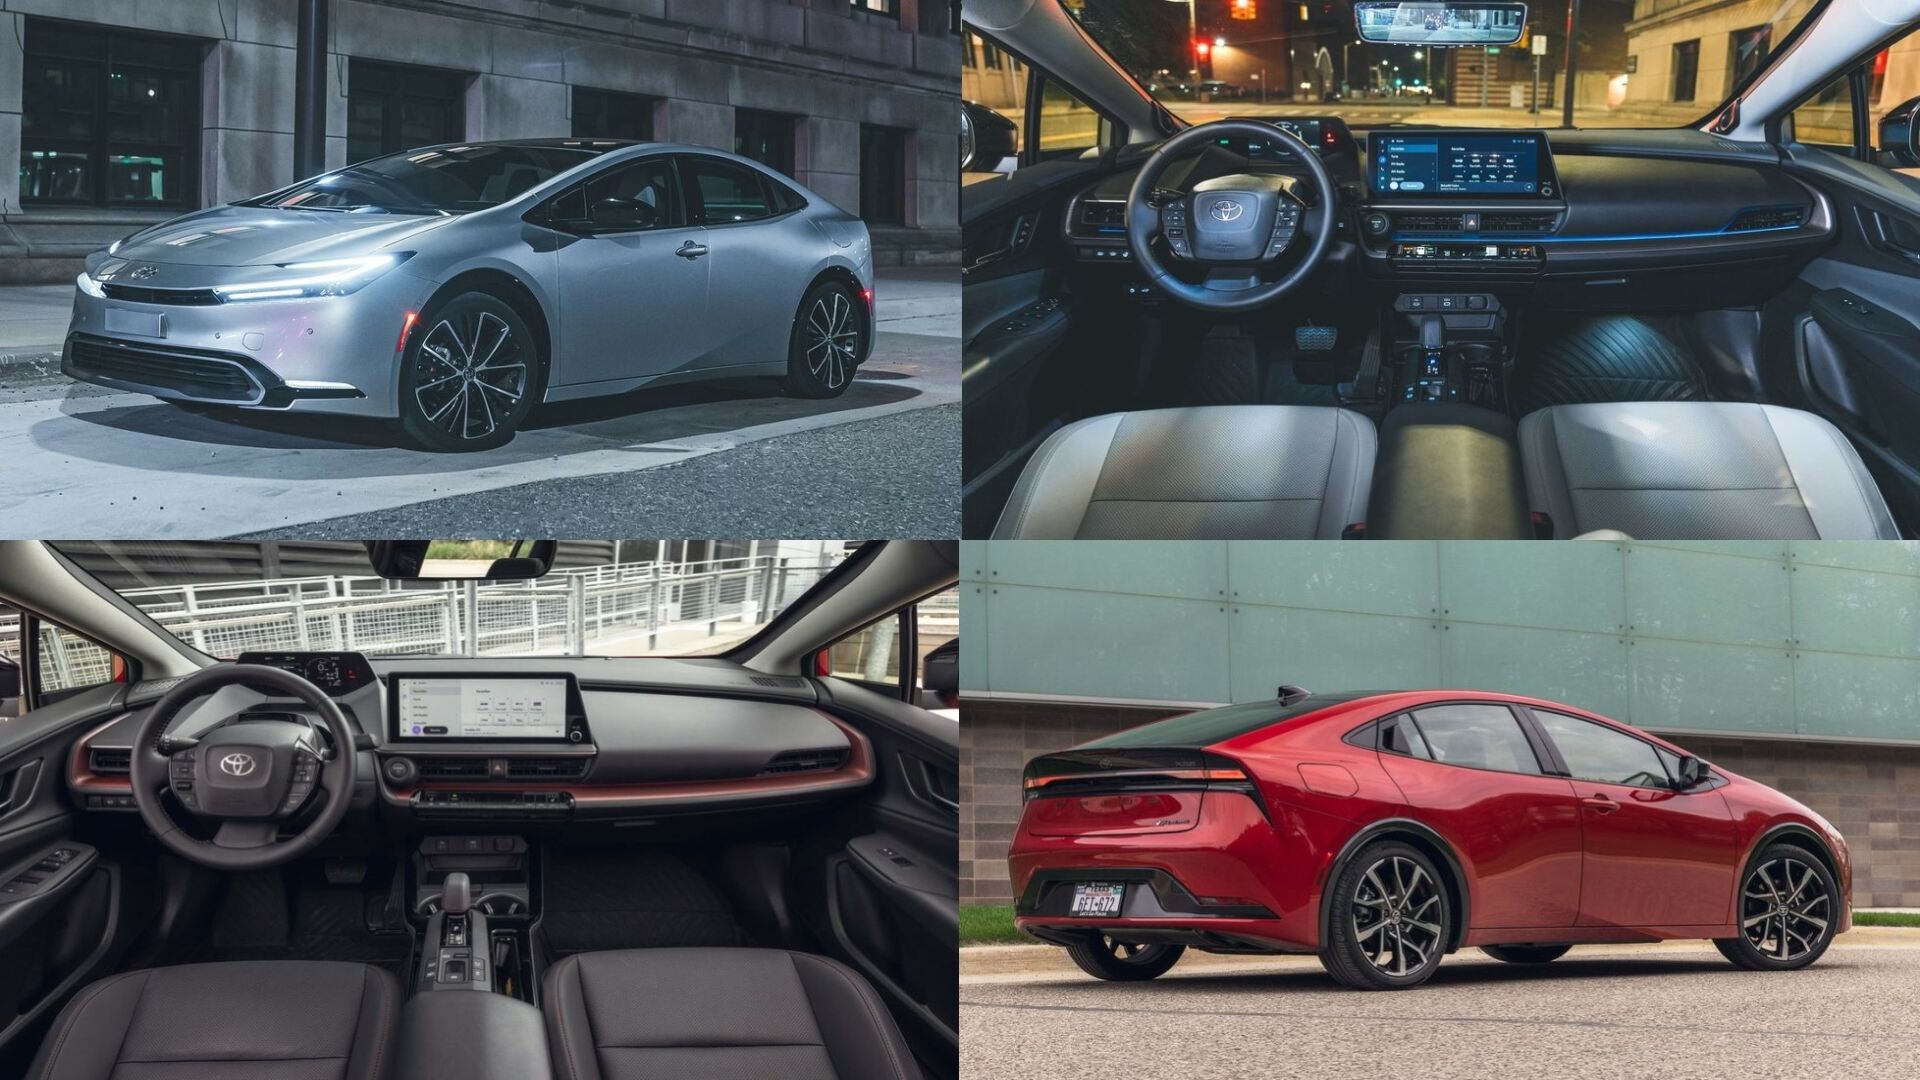 Toyota Prius Hybrid Interior And Exterior (Above) Vs Toyota Prius Prime Interior And Exterior (Below) (Credits Toyota)